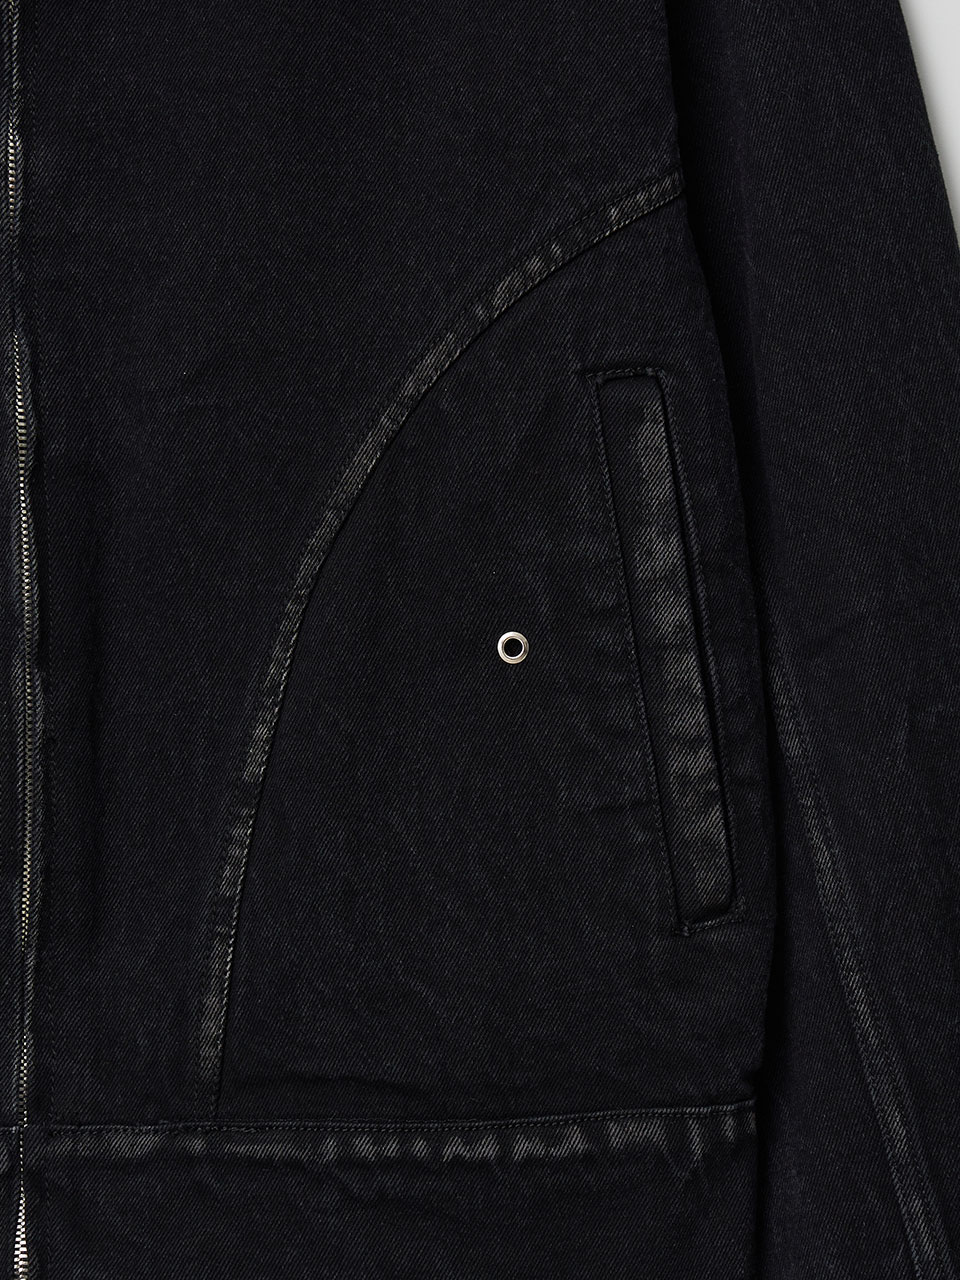 Bulky zipper denim Jacket - Washed black